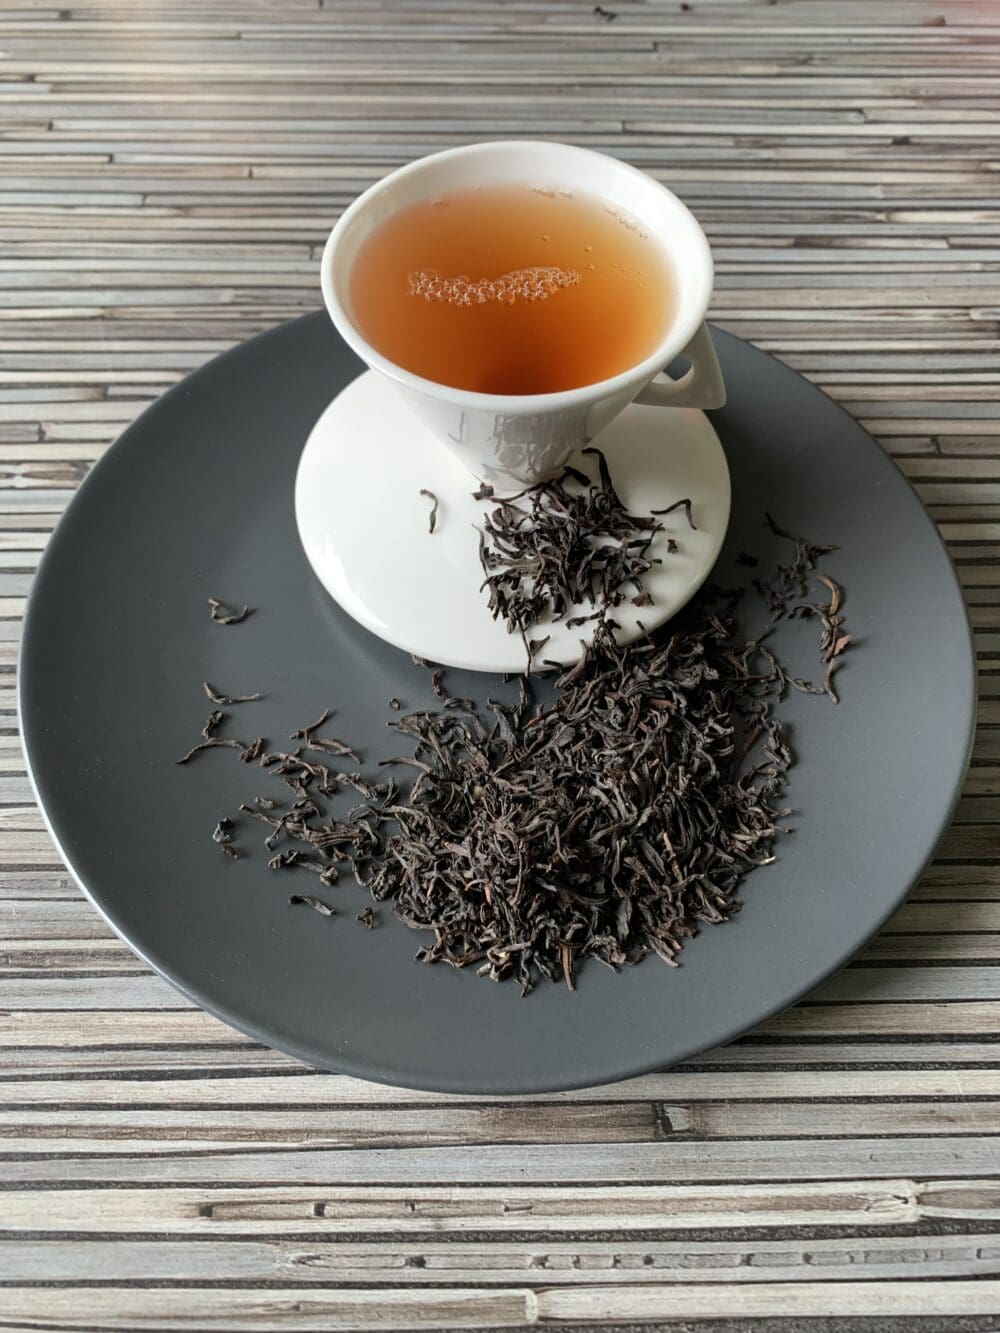 Schwarzer Tee Ceylon Ahinsa OP k.b.A. schwarztee teesorte schwarzer tees